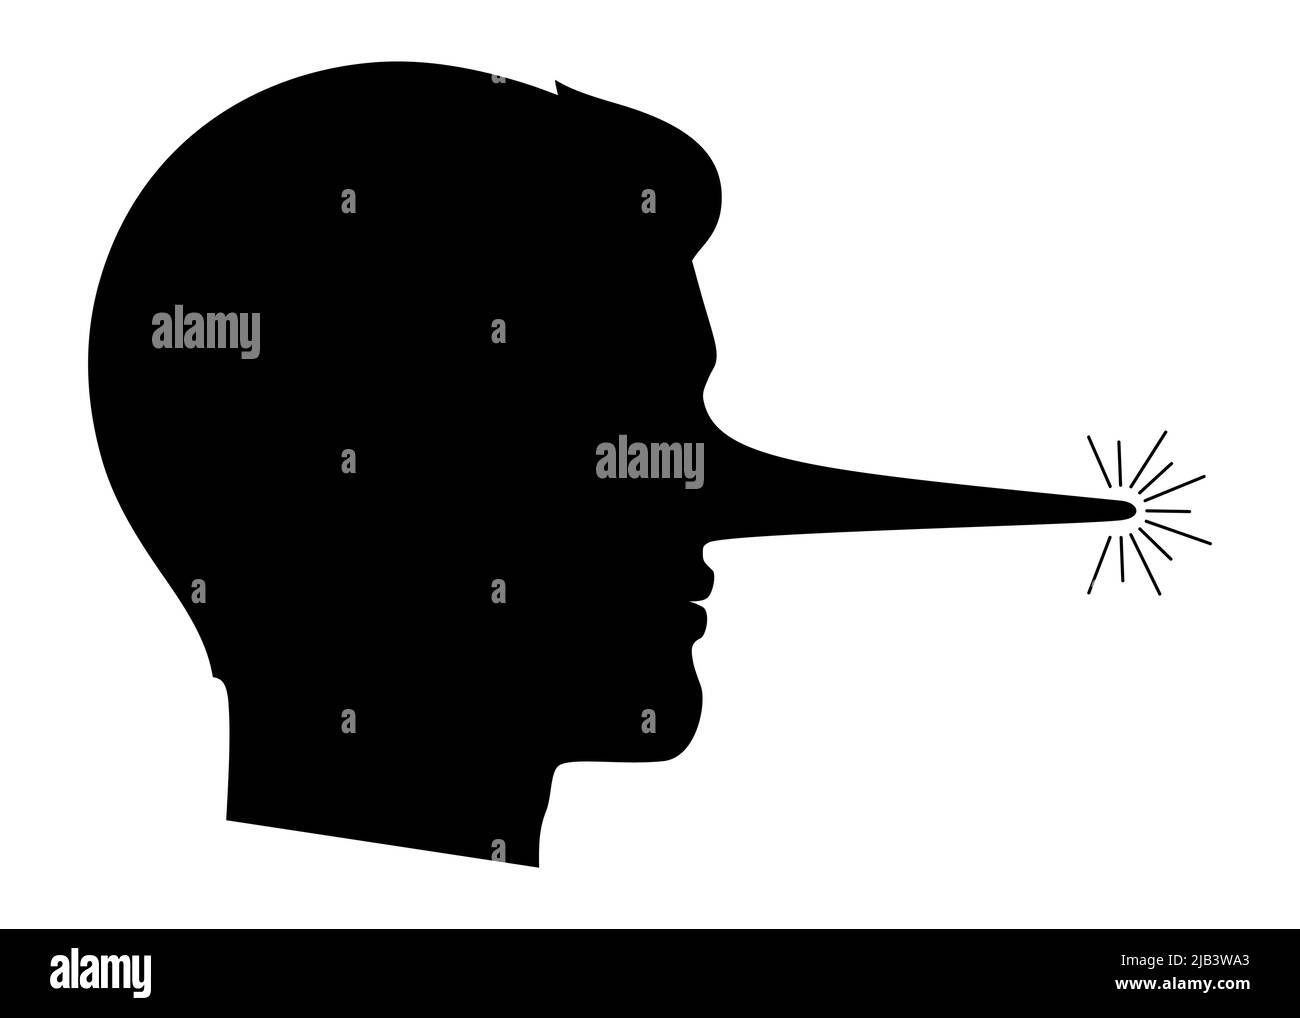 Lügner Mann mit einer langen Nase, schwarze Silhouette Konzept Vektor Illustration. Stock Vektor